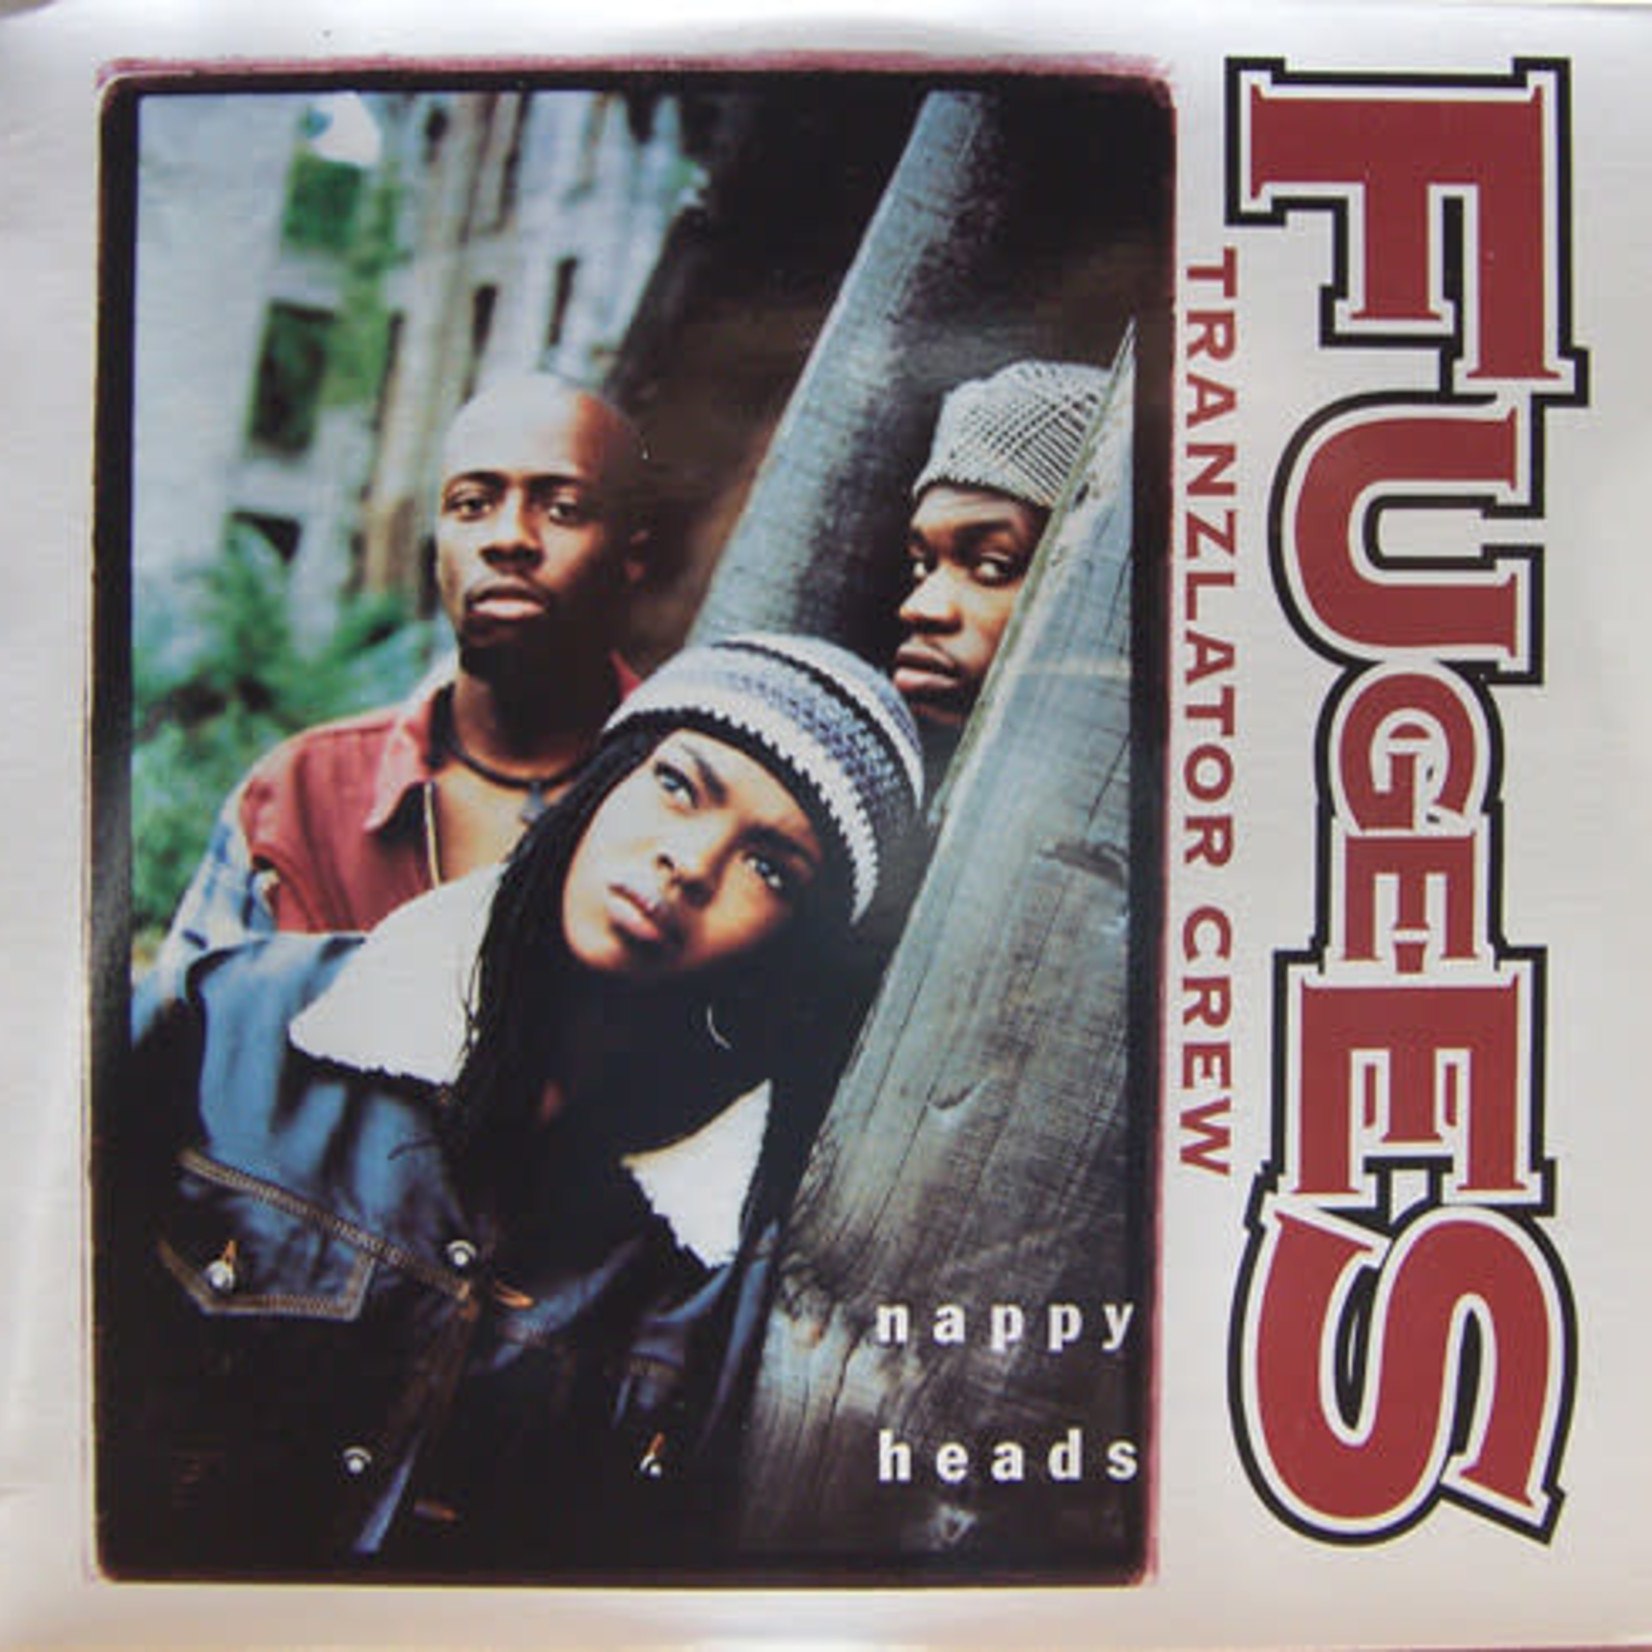 Fugees (Tranzlator Crew) – Nappy Heads